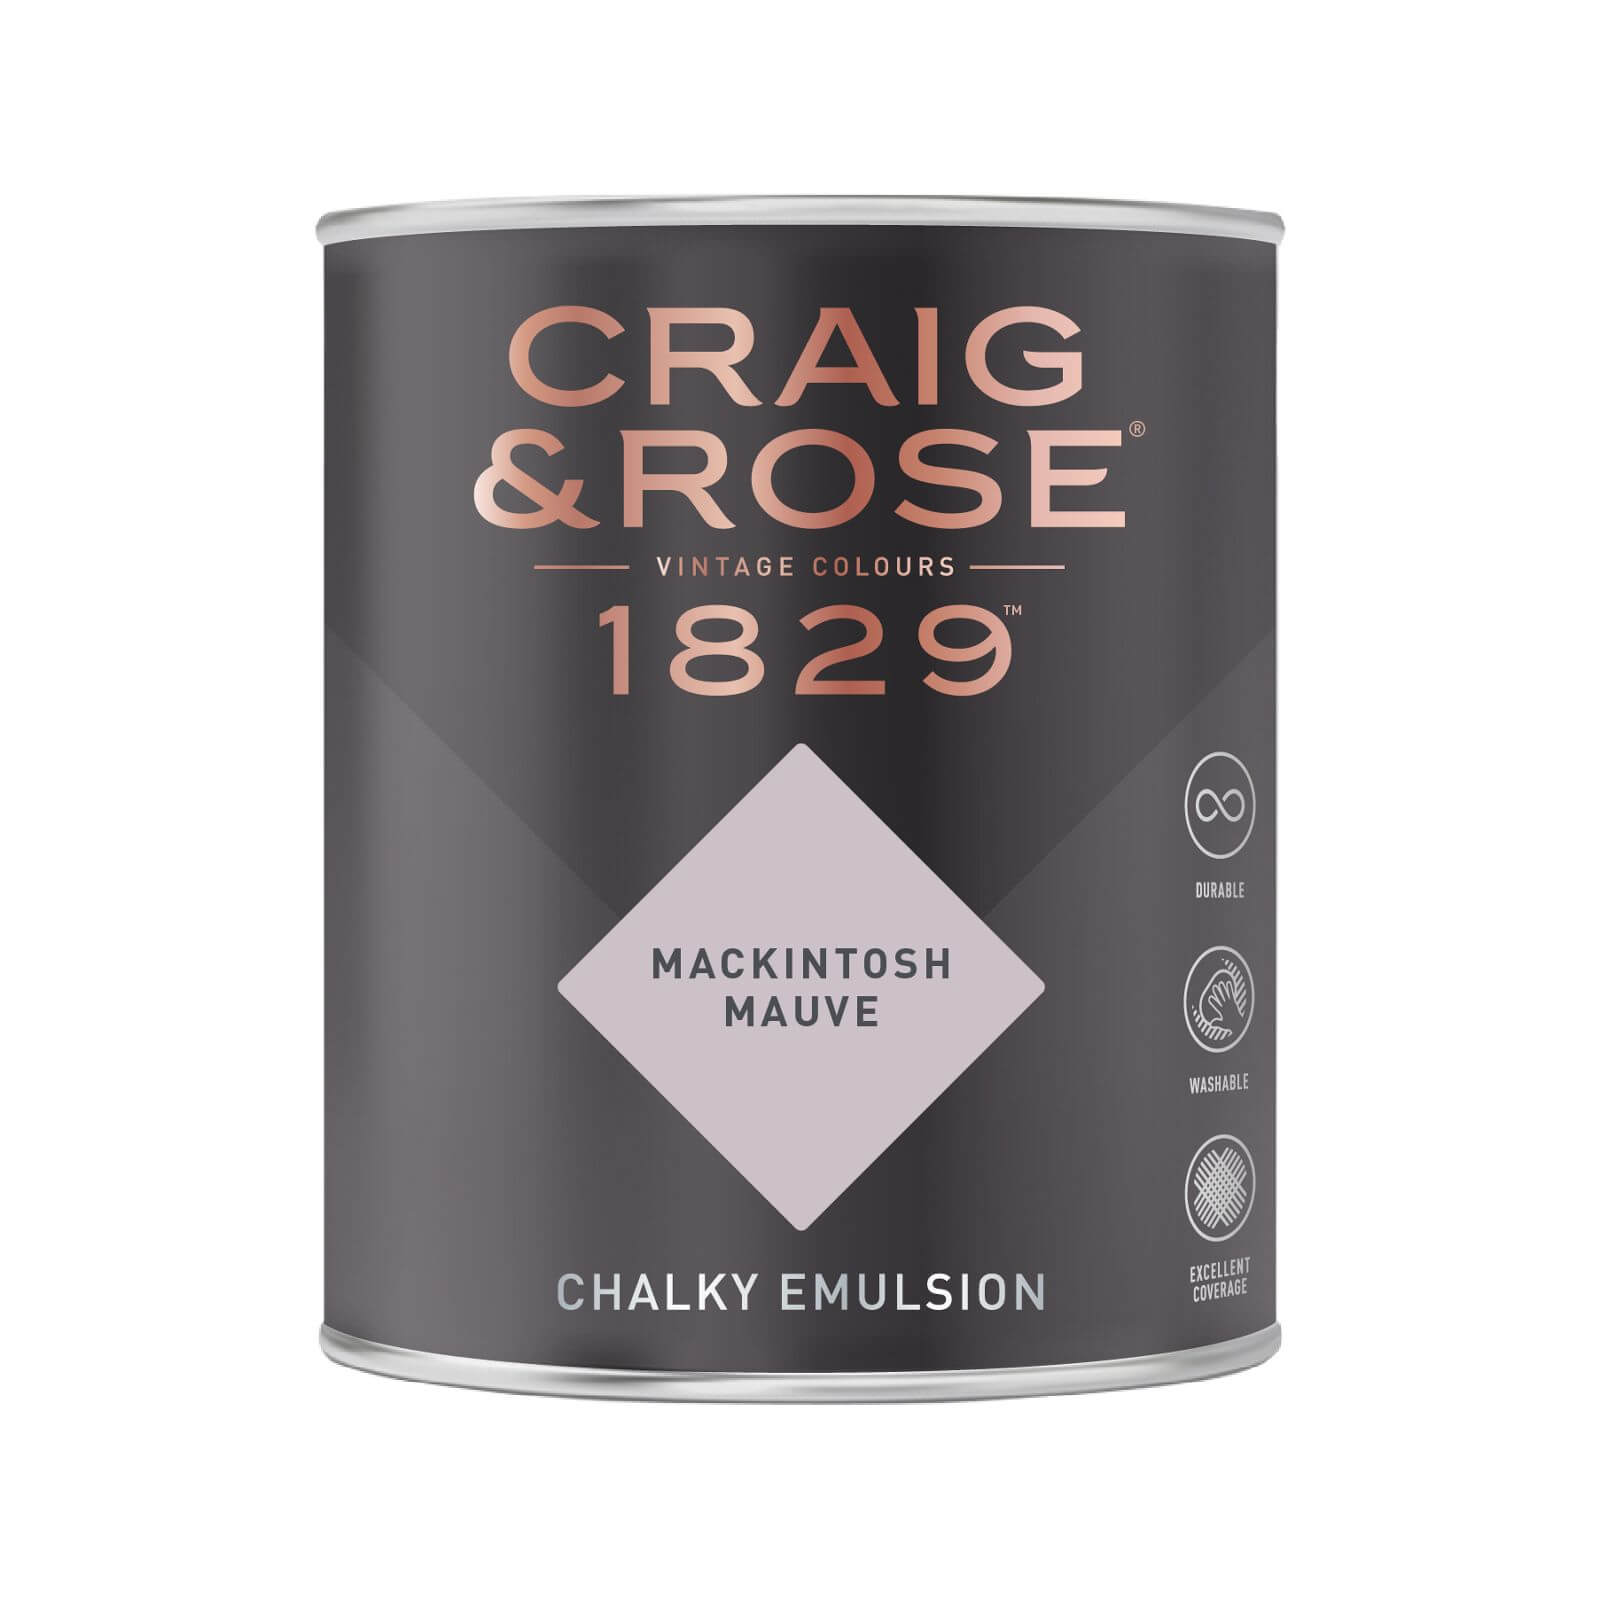 Craig & Rose 1829 Chalky Emulsion Paint Mackintosh Mauve - 750ml